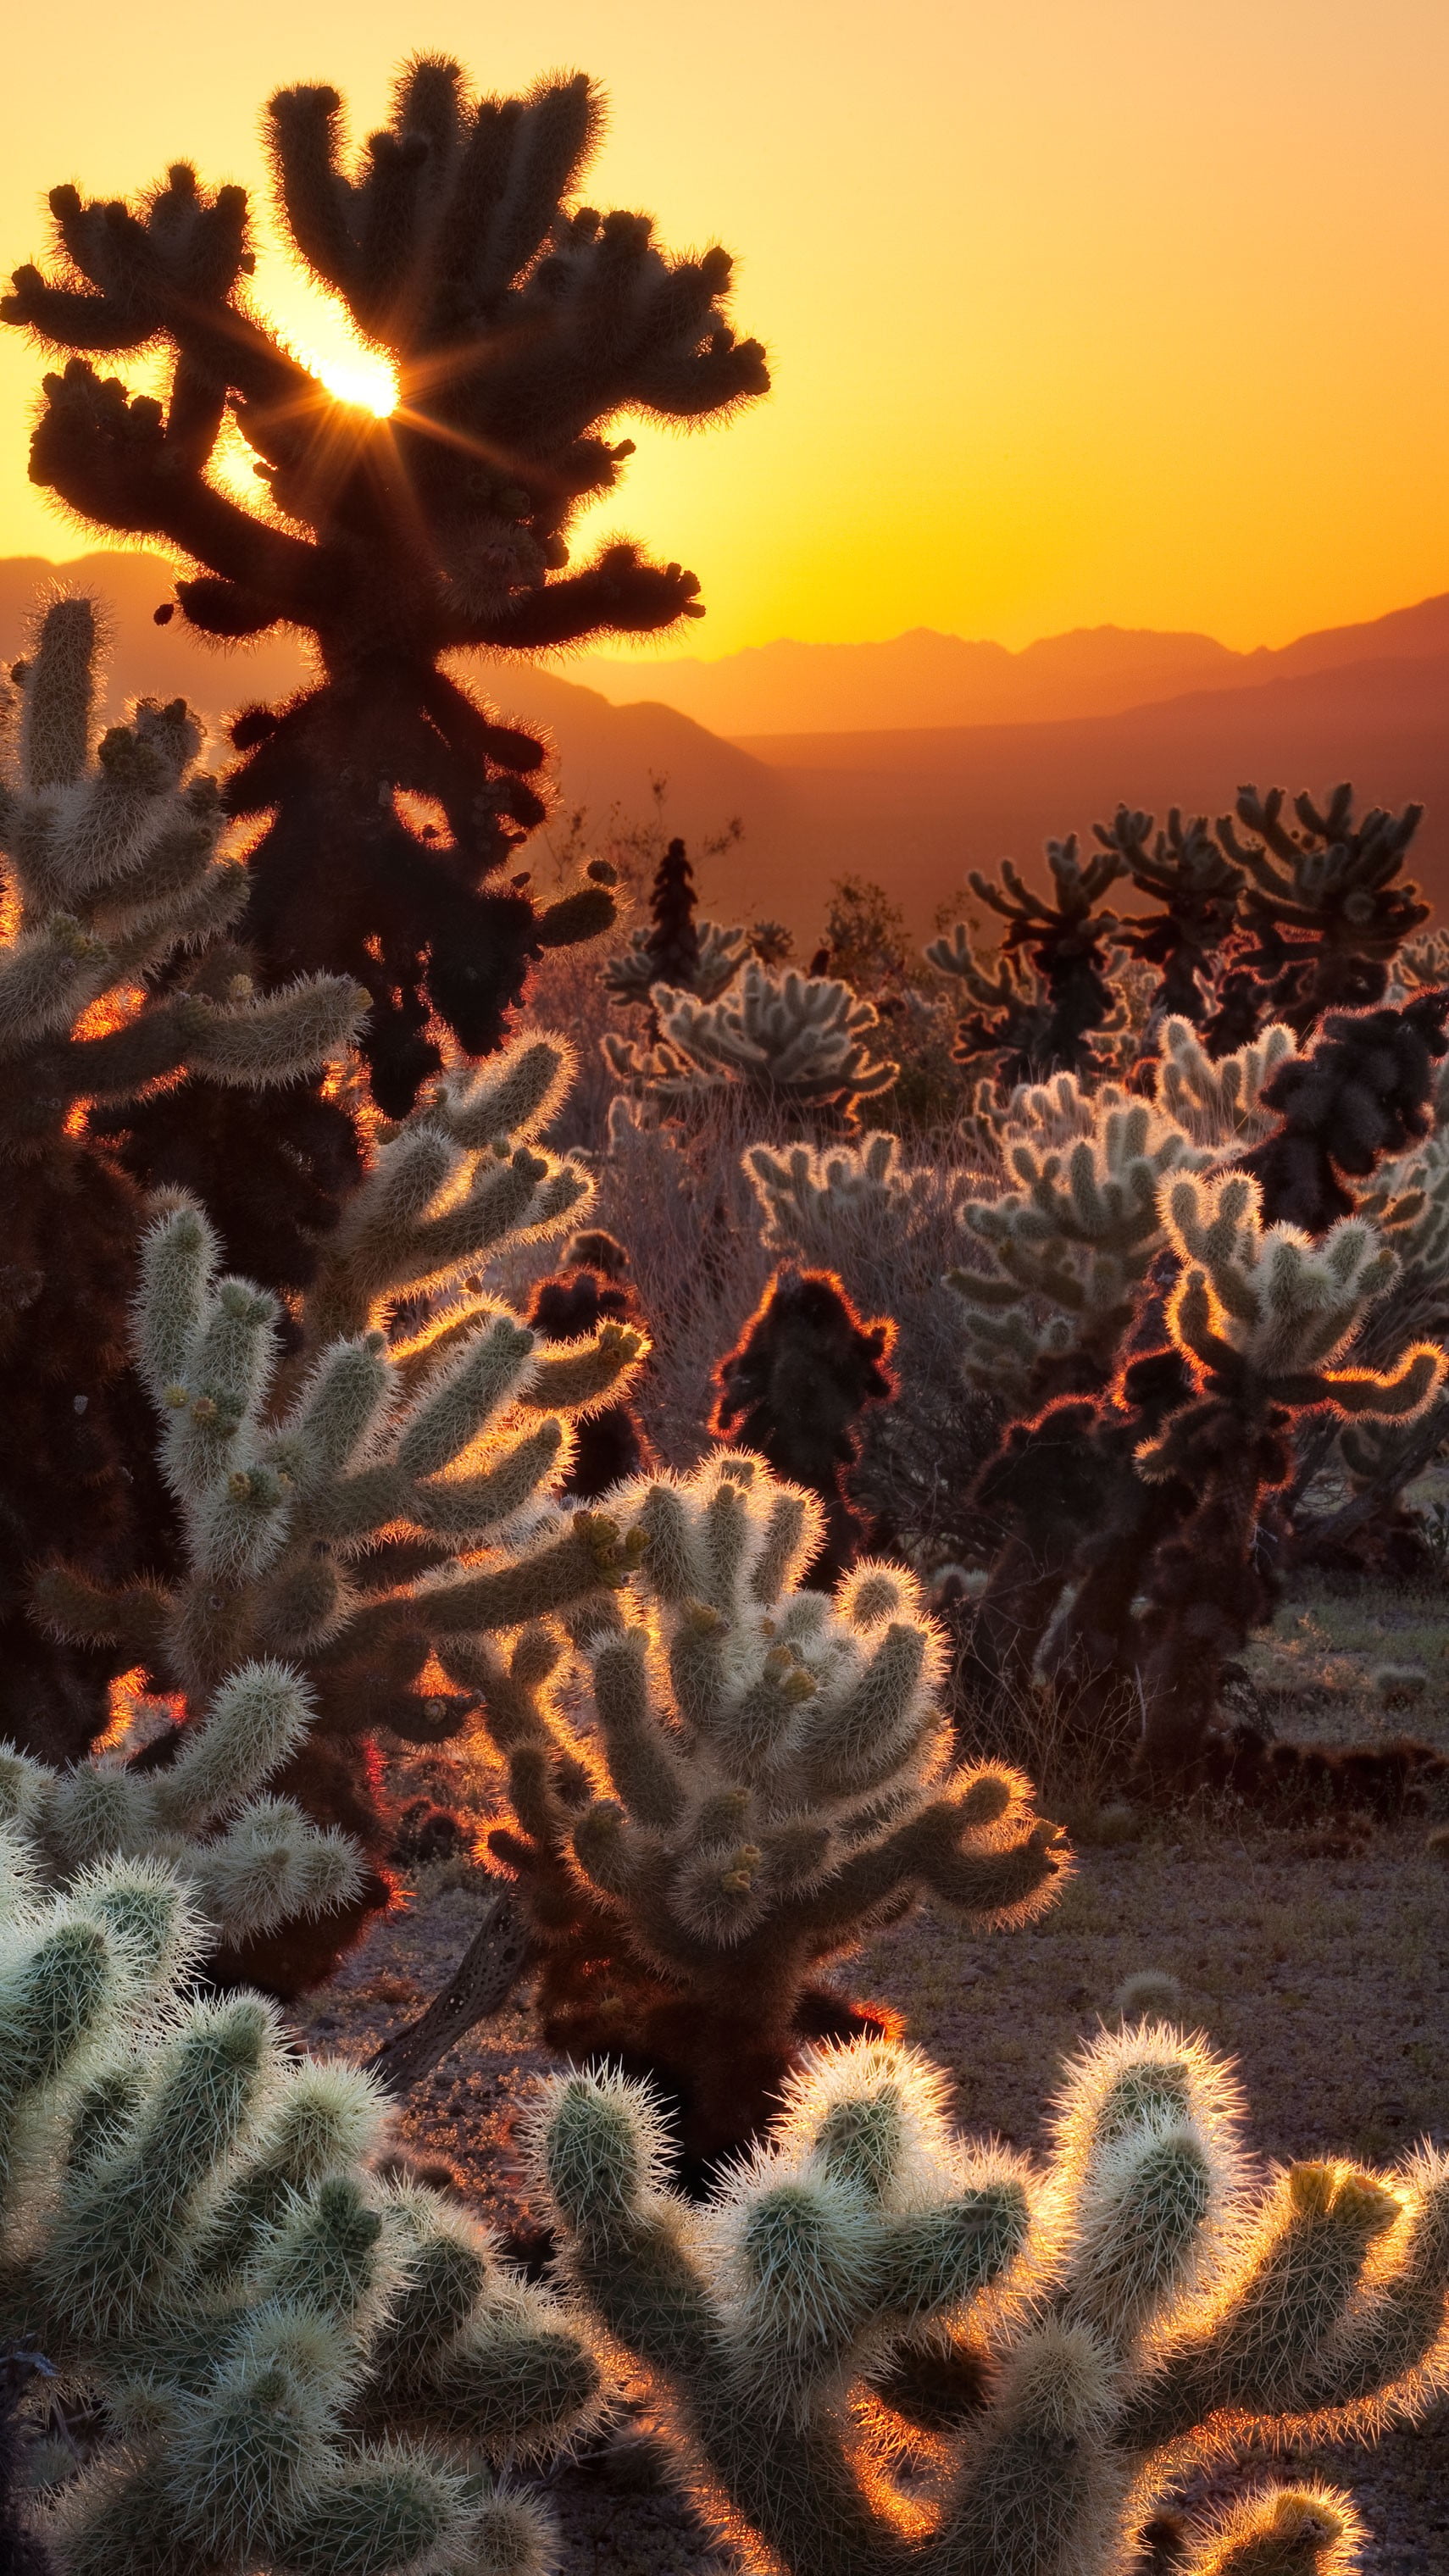 green cactus lot, desert, landscape, sunset, plant, nature, no people